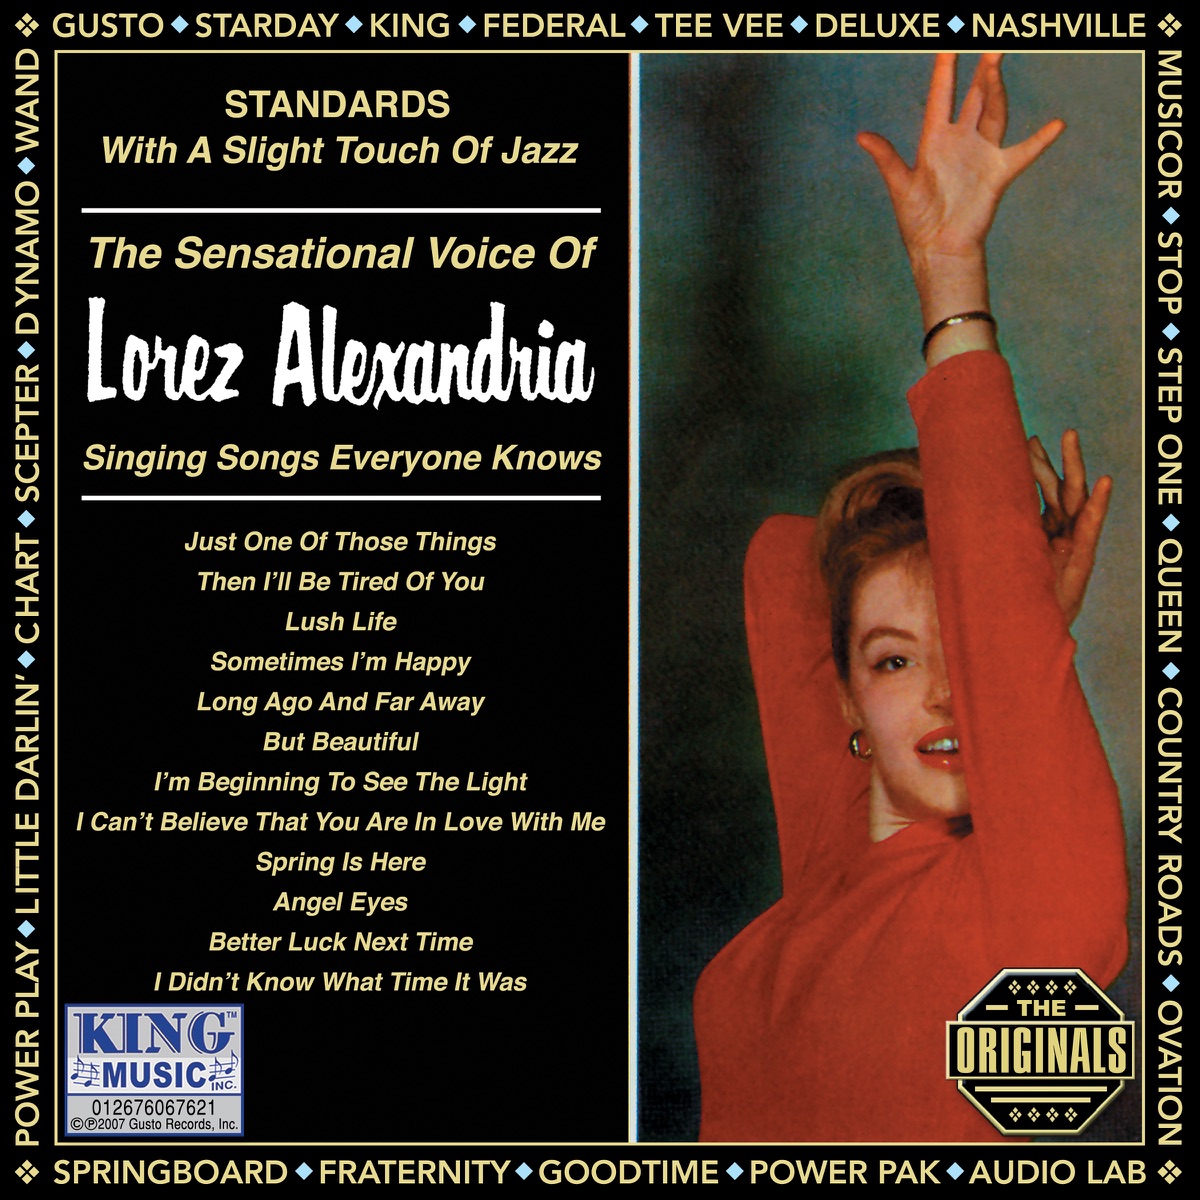 Alexandria the Great (Remastered) by Lorez Alexandria on Apple Music